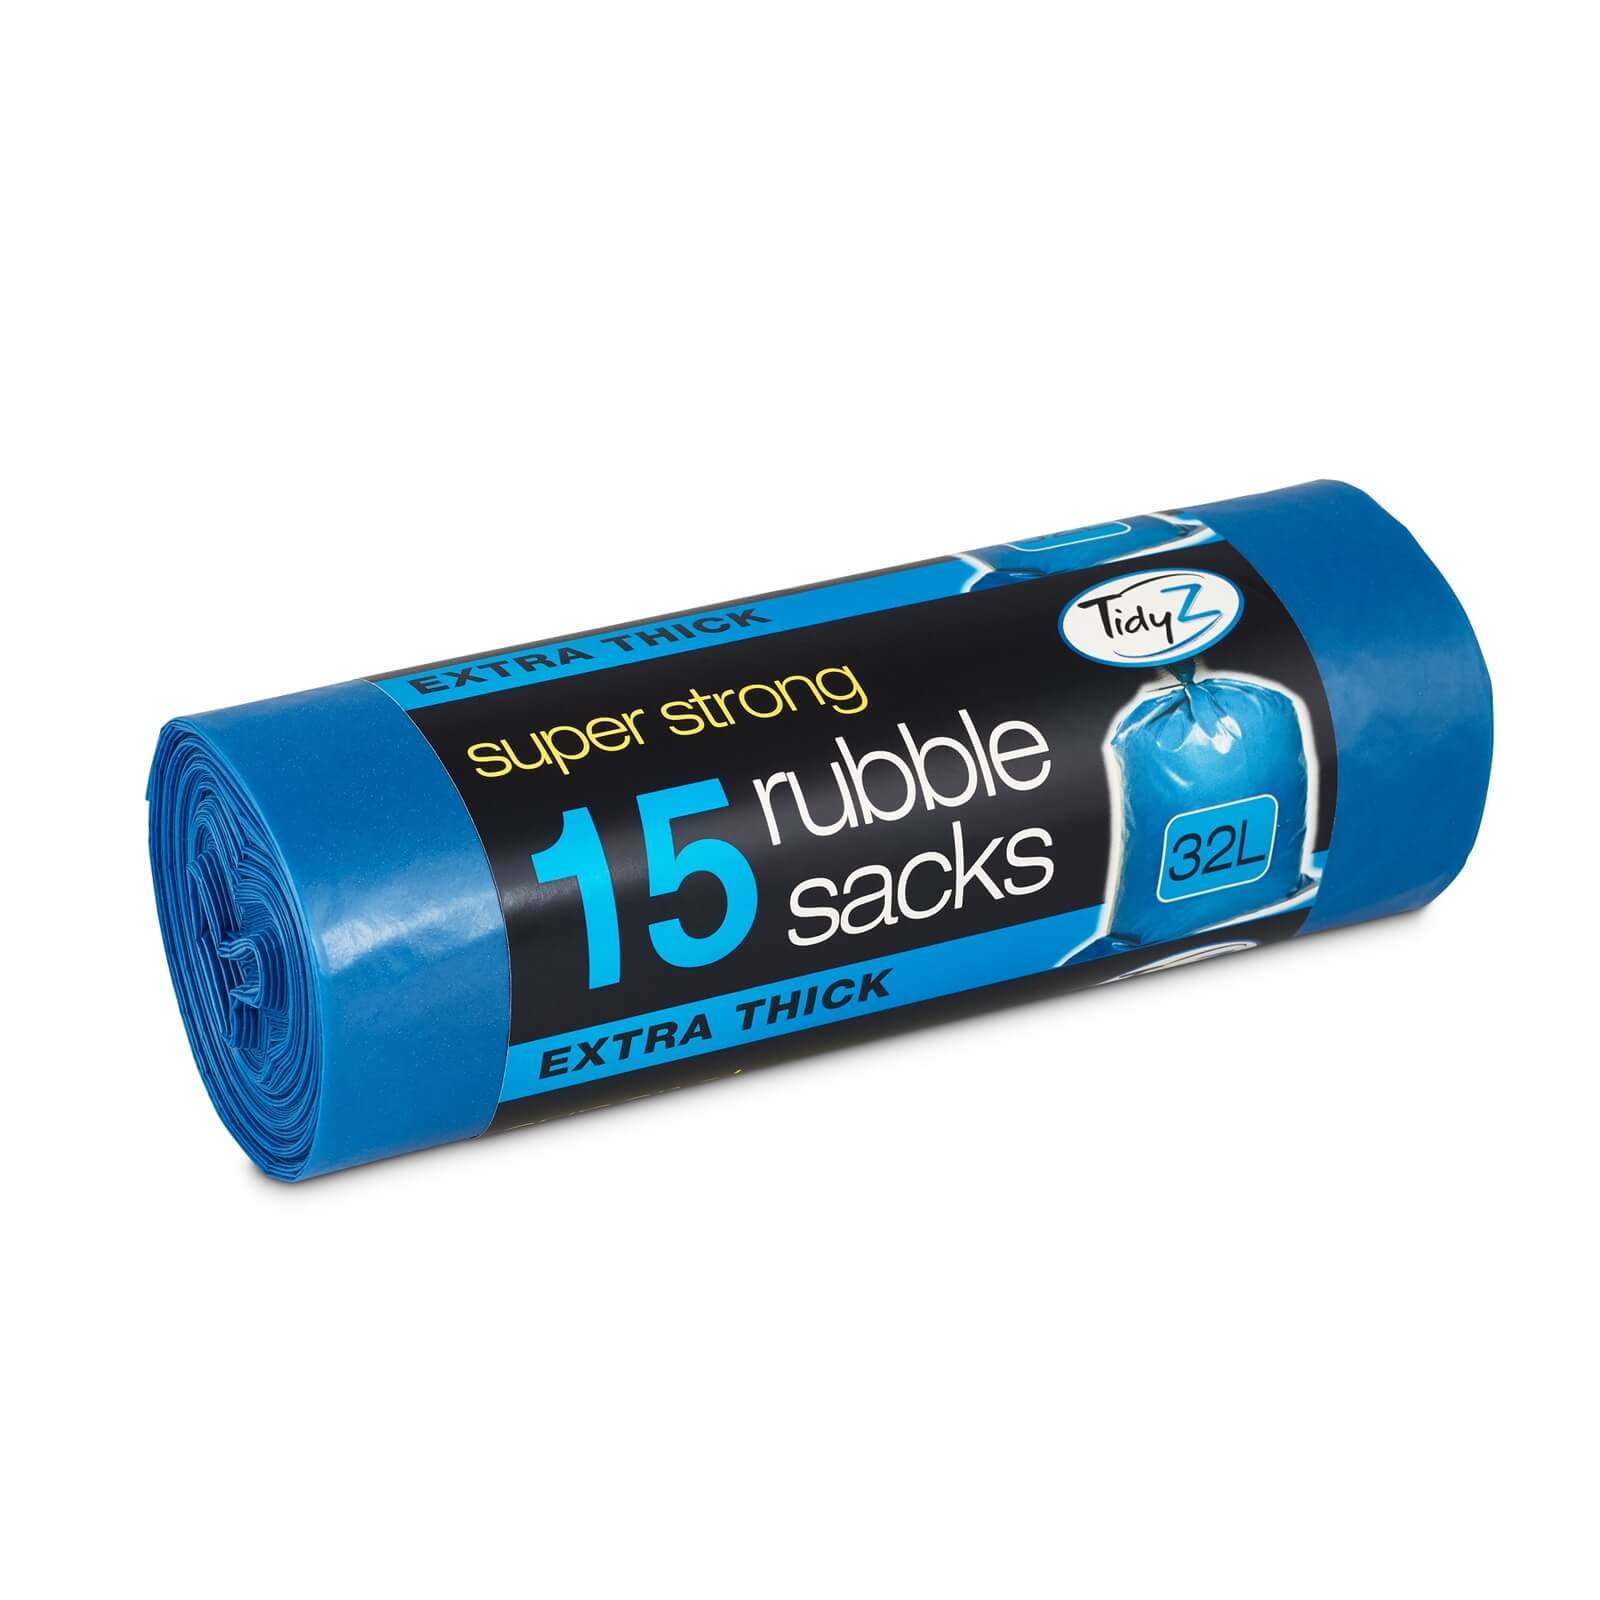 Rubble Sacks - 15 Pack